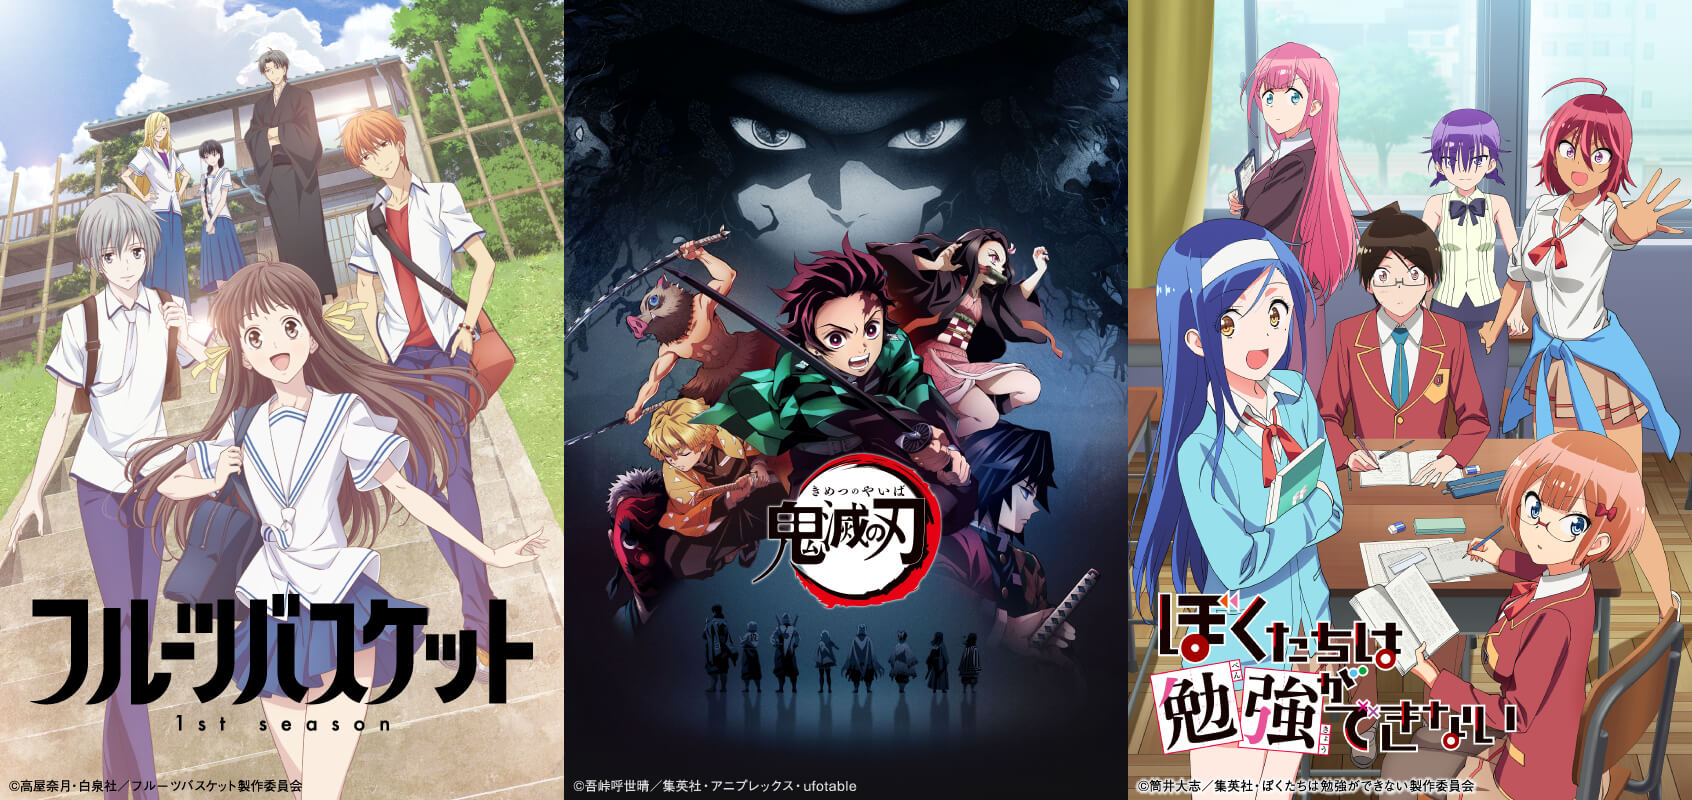 Watch Popular Anime TV Shows Online  Hulu Free Trial